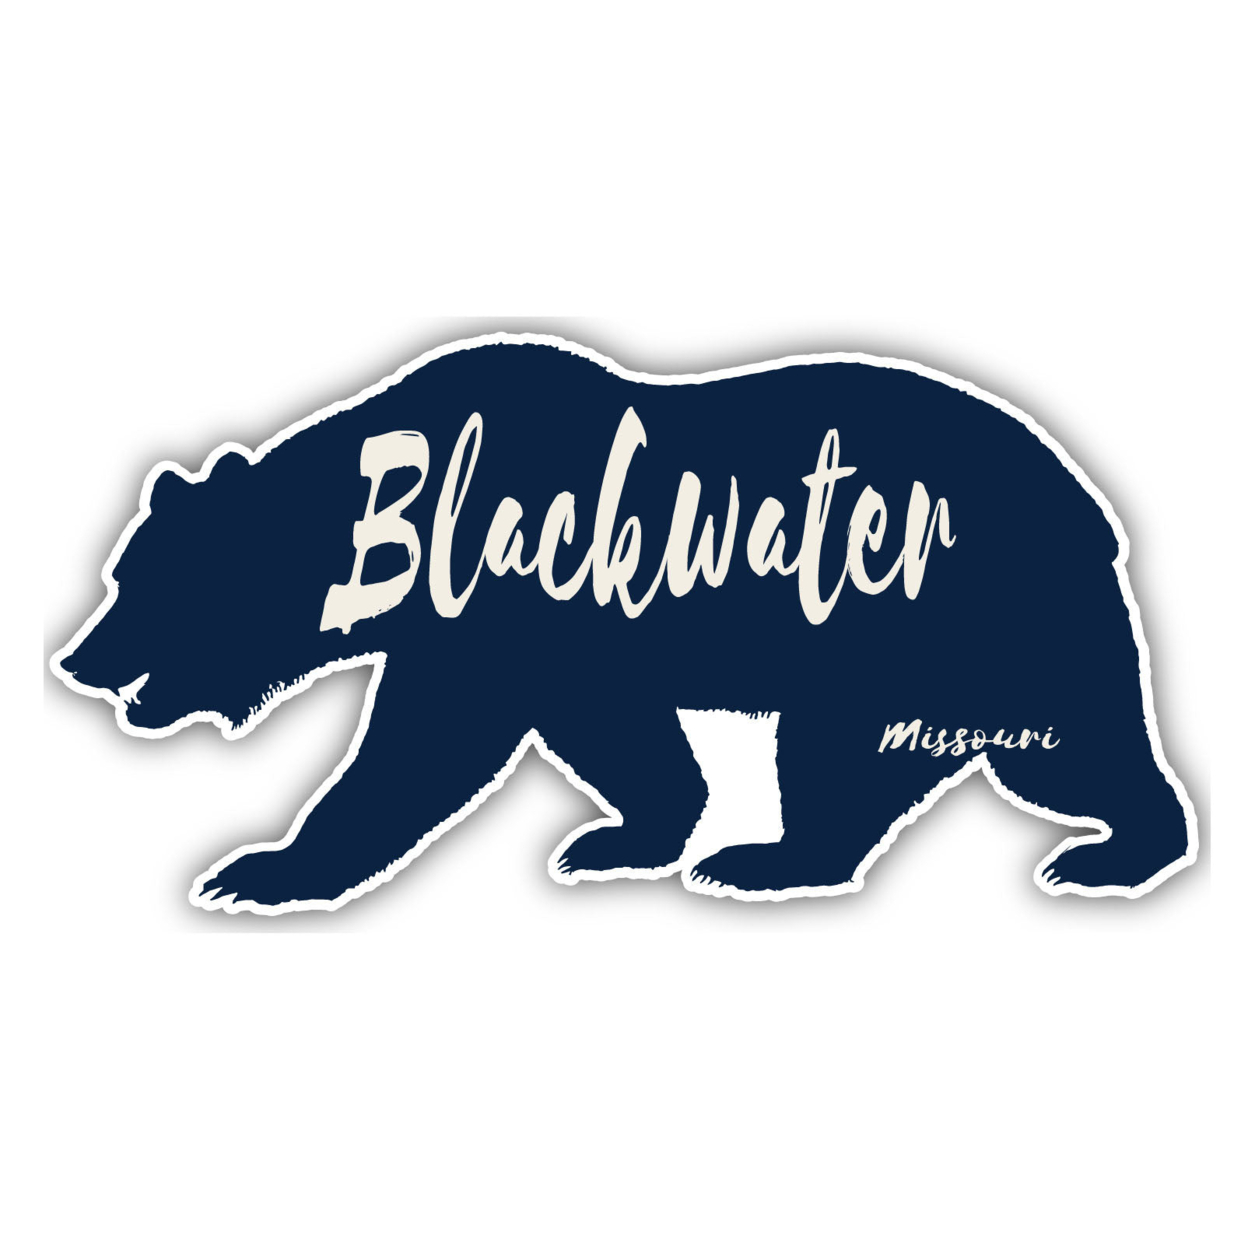 Blackwater Missouri Souvenir Decorative Stickers (Choose Theme And Size) - 4-Pack, 10-Inch, Bear